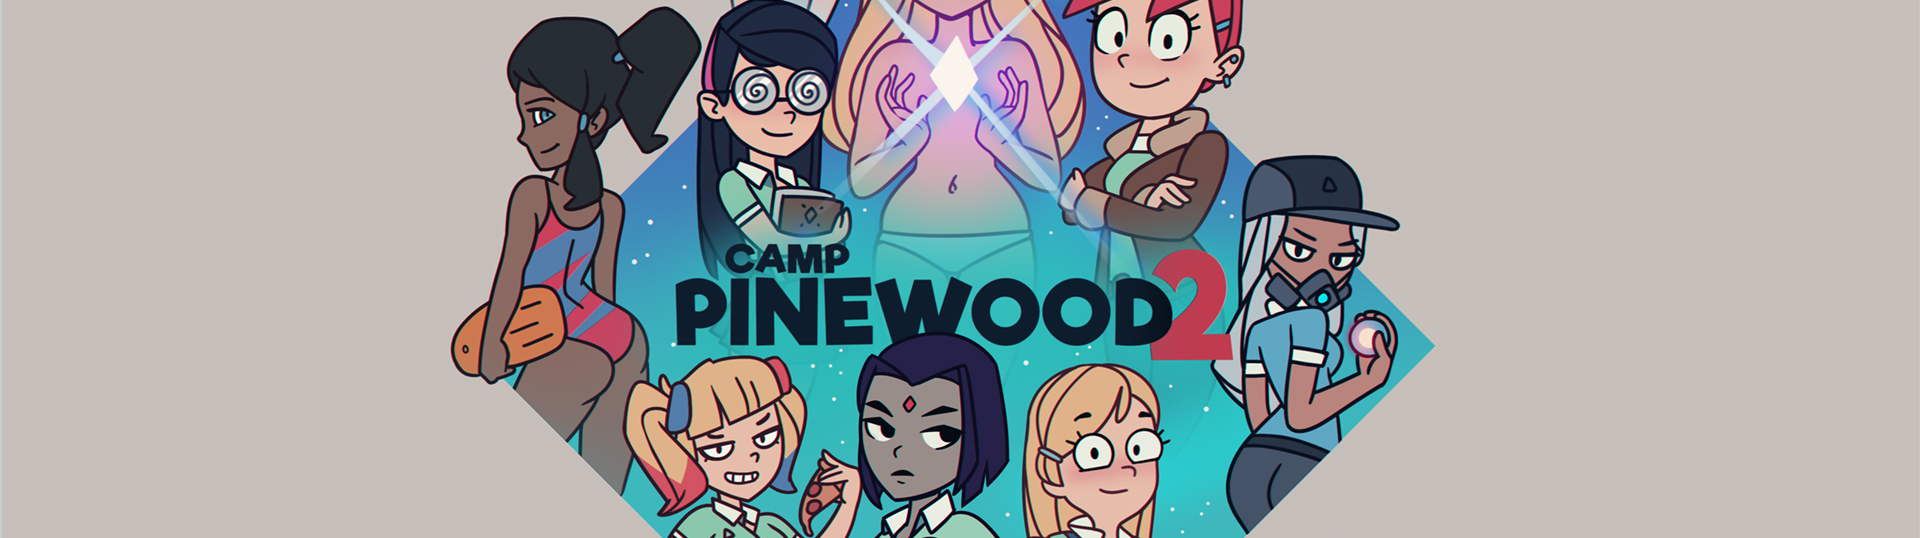 1125943 camp pinewood 2 banner